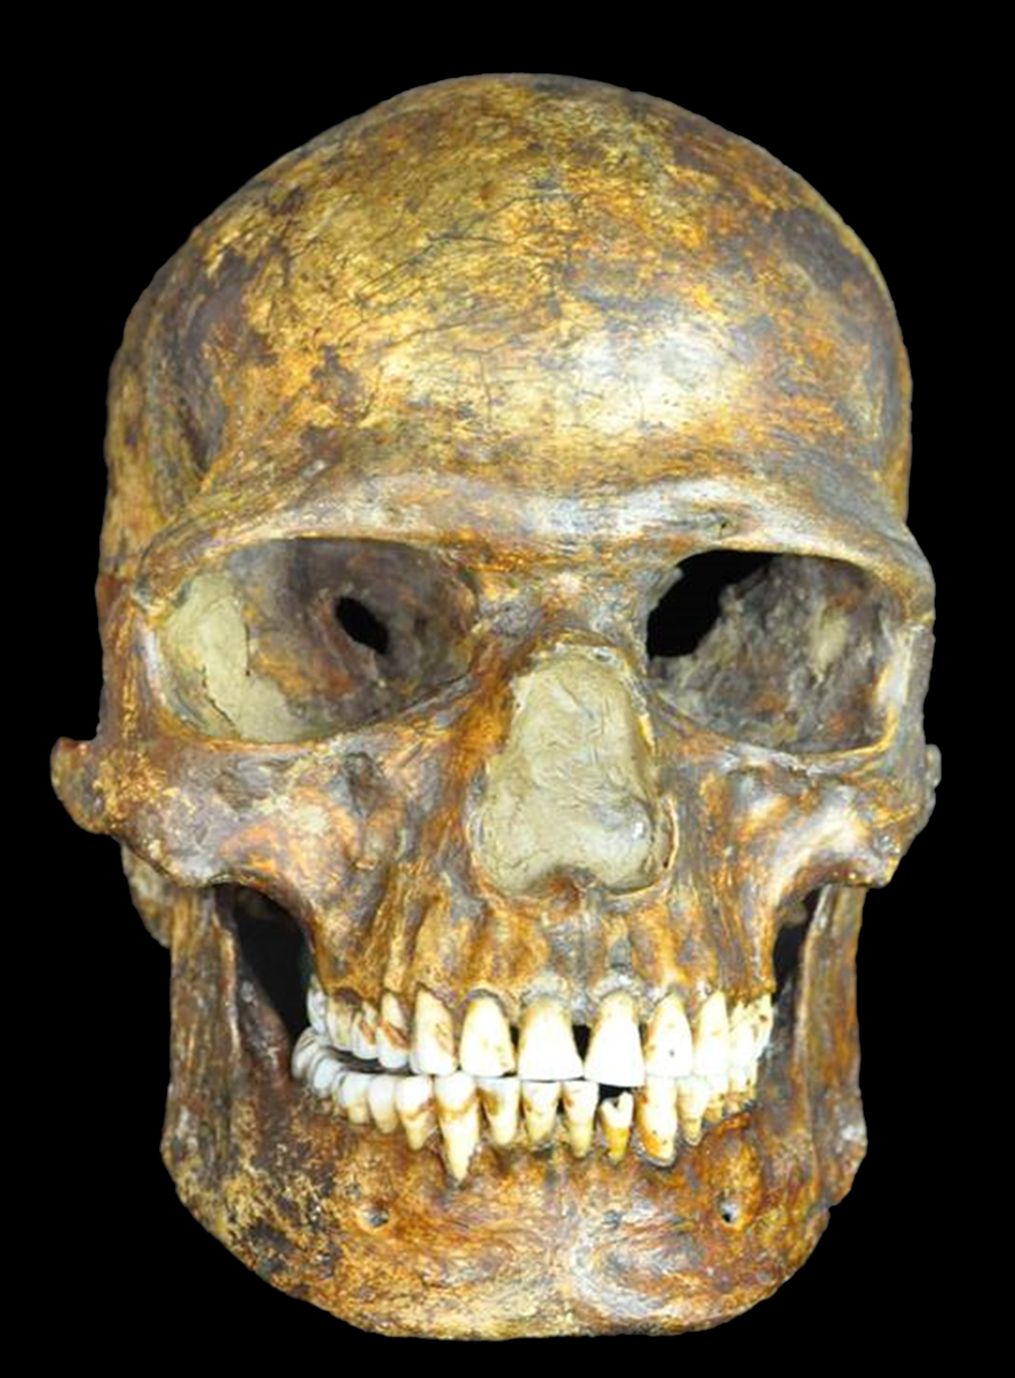 The fossil skull from Kostenki 14